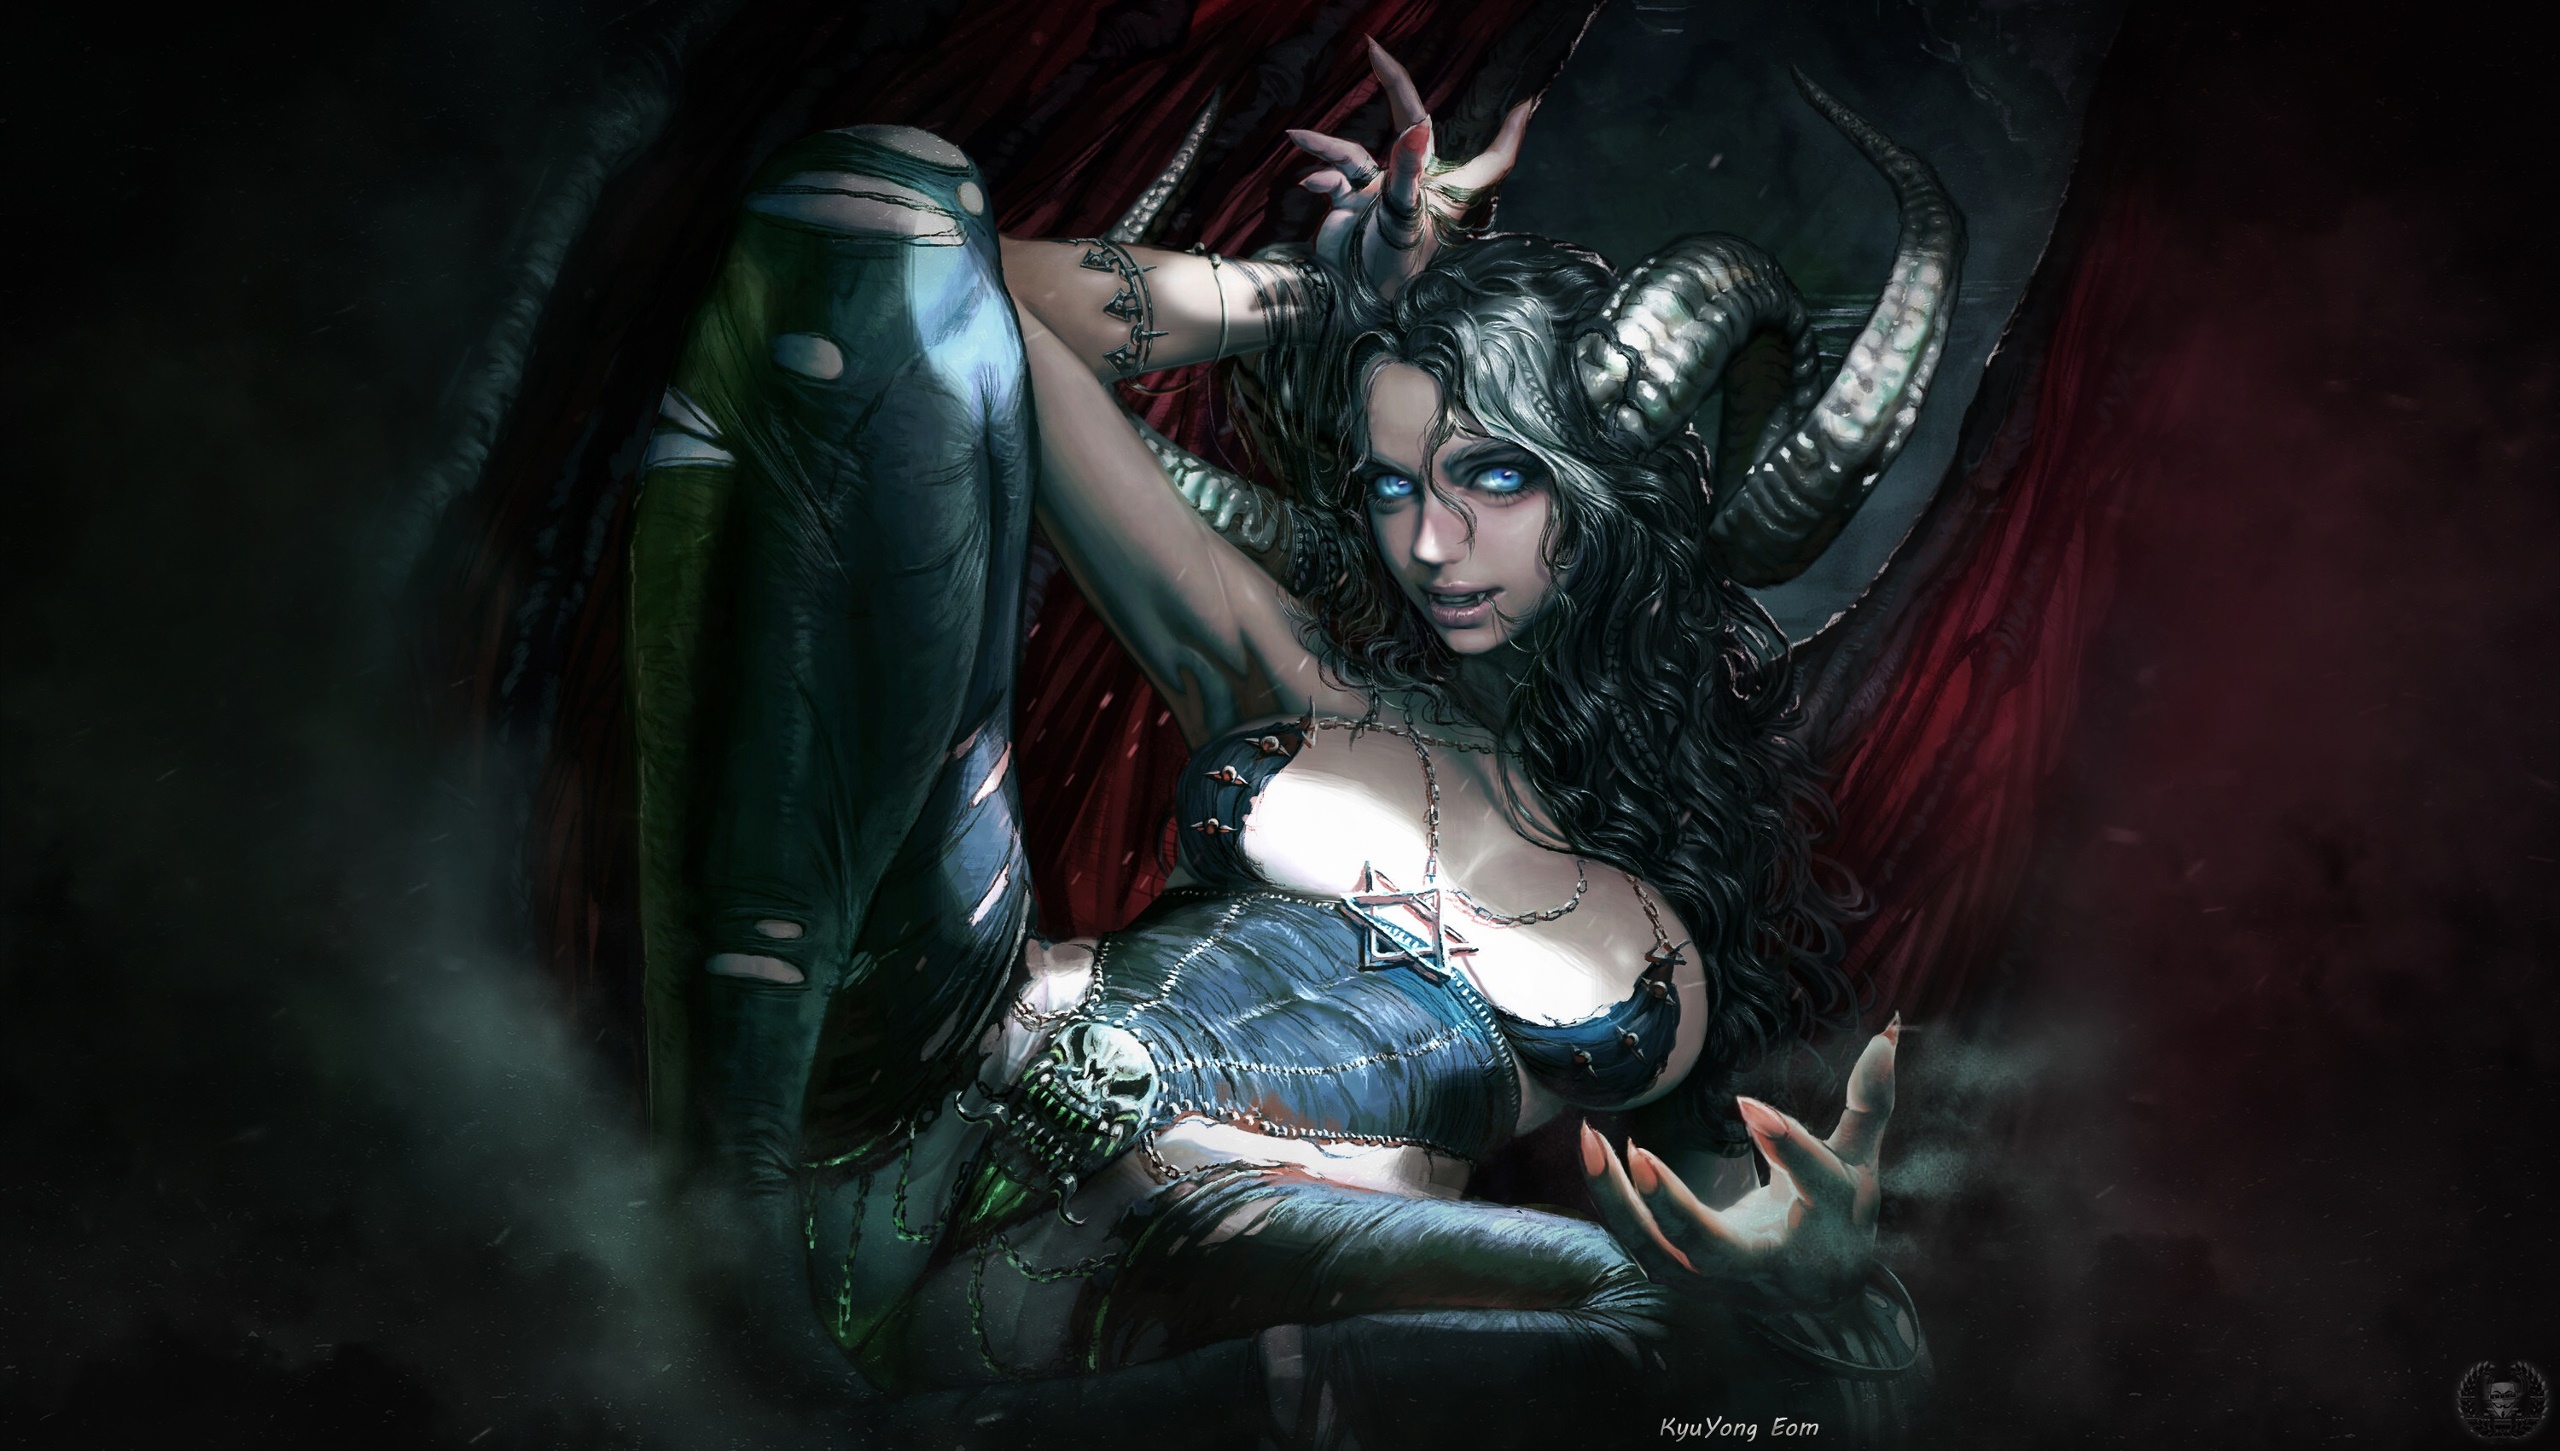 General 2560x1451 fantasy art fantasy girl artwork horns blue eyes succubus demon KyuYong Eom Gothic